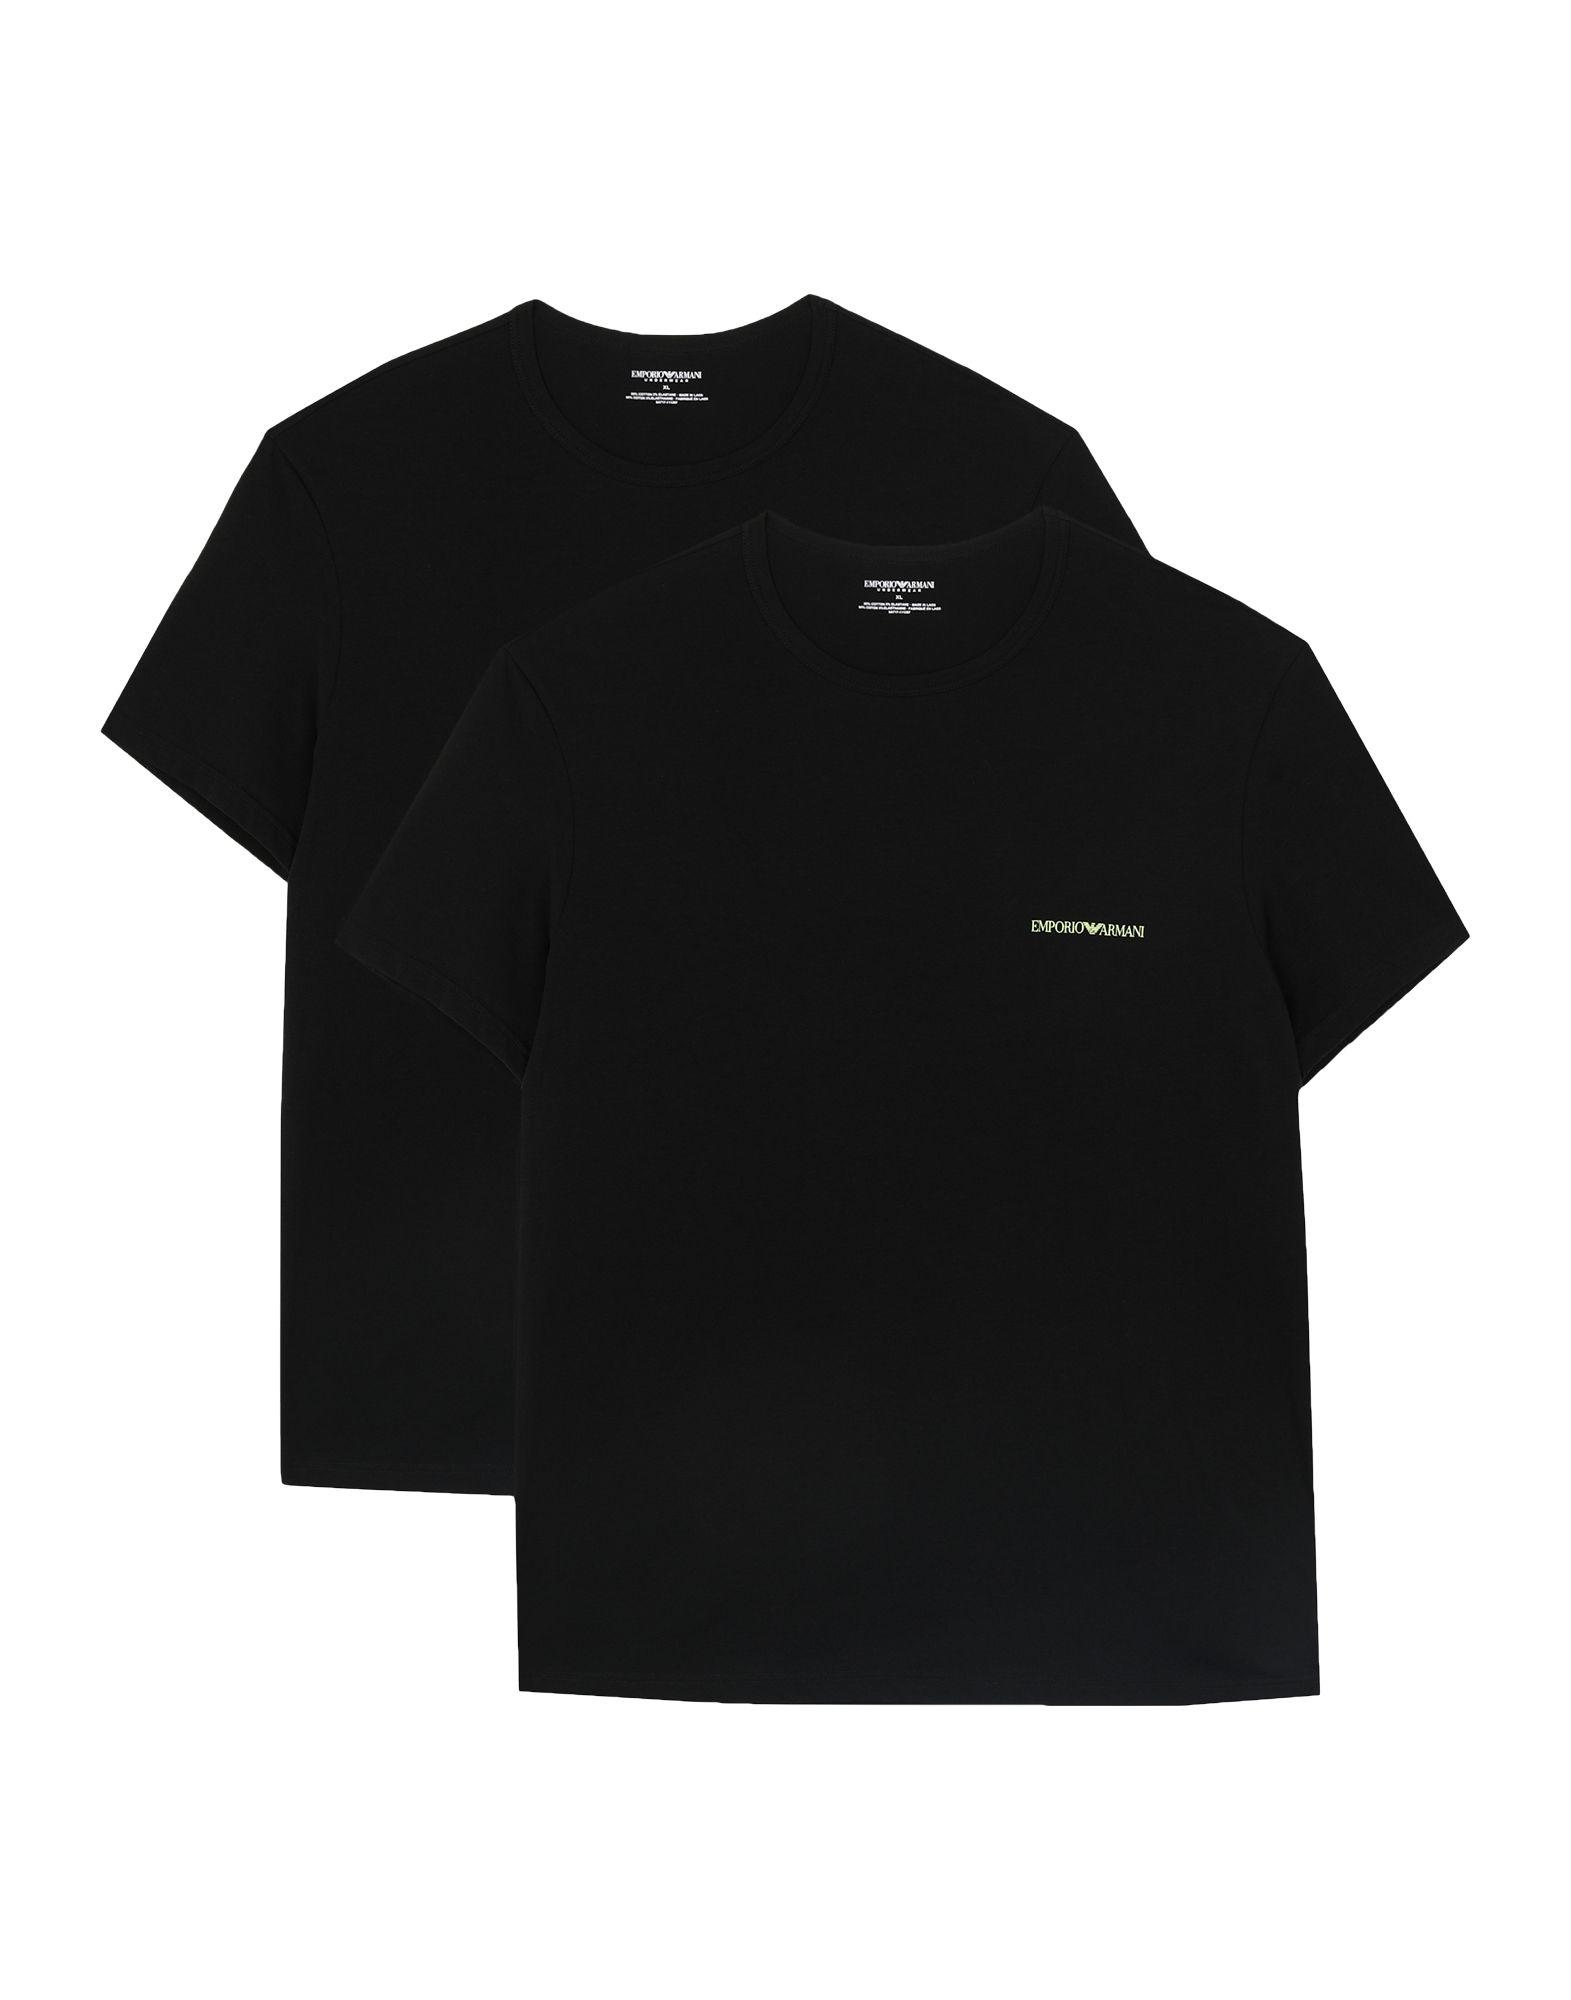 Emporio Armani Undershirt in Black for Men - Lyst